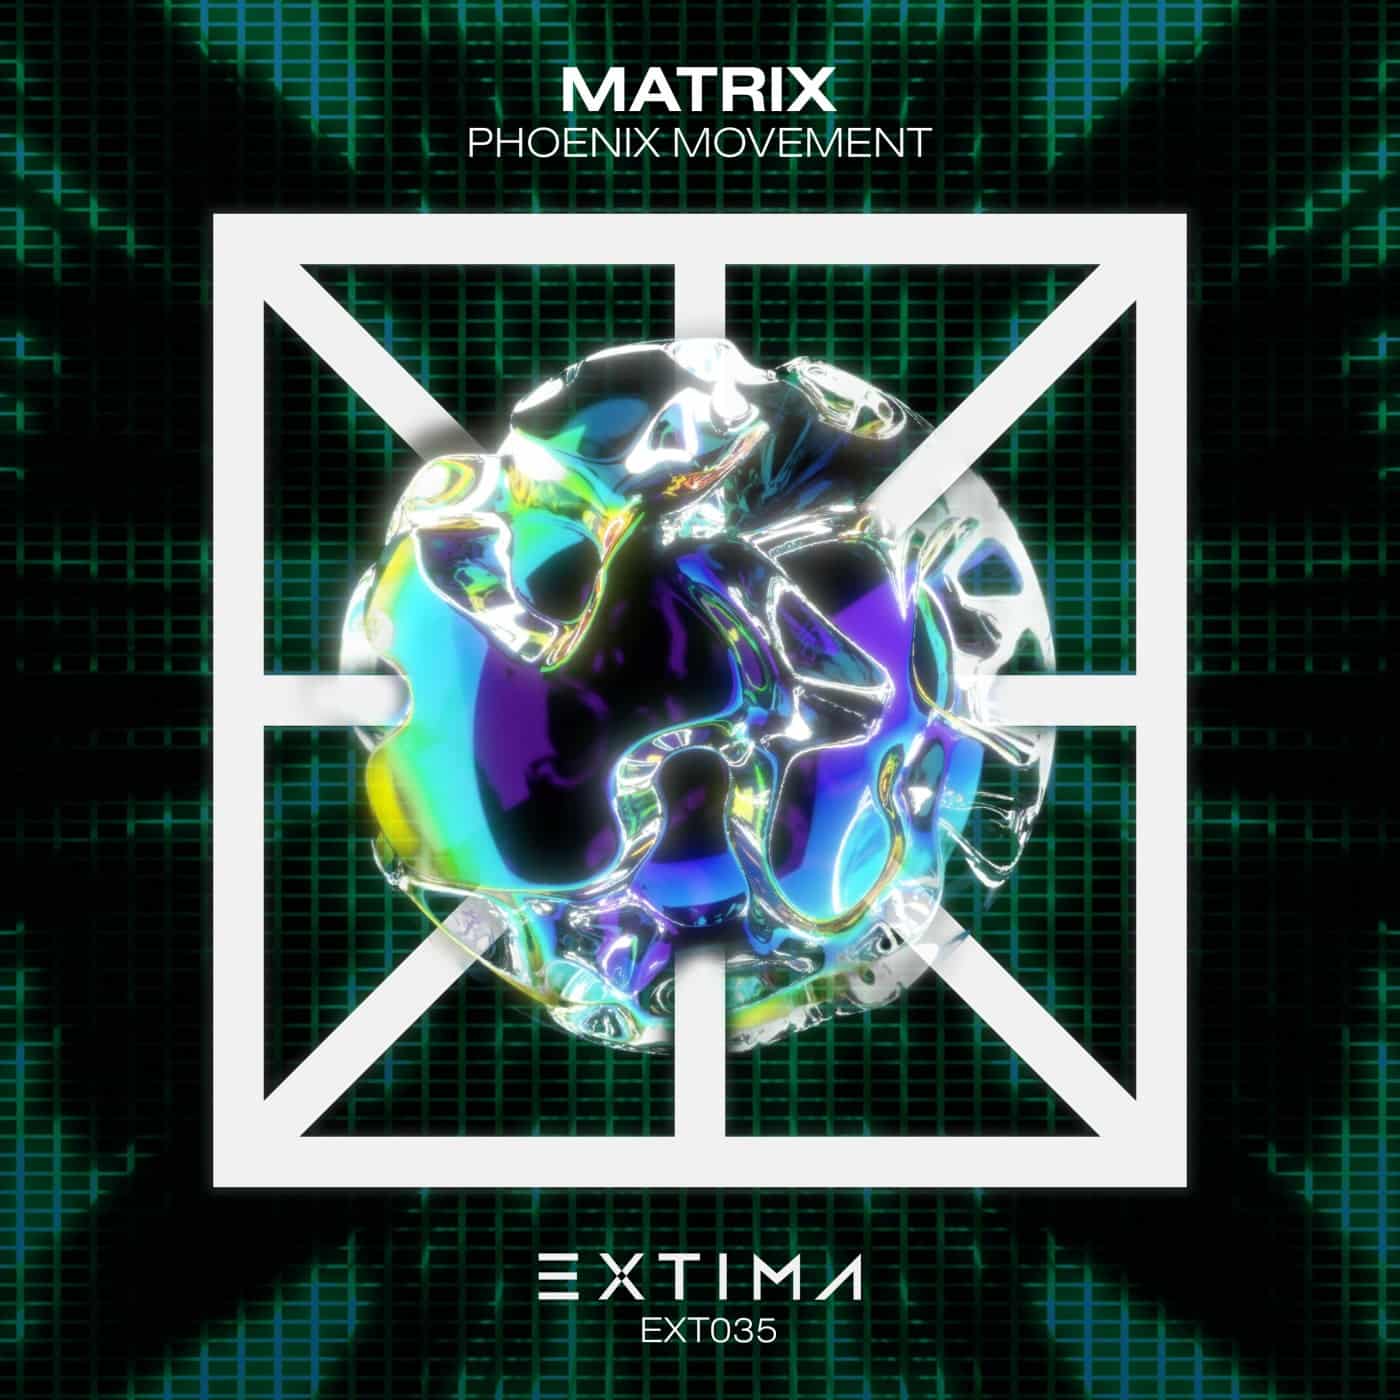 Download Matrix on Electrobuzz